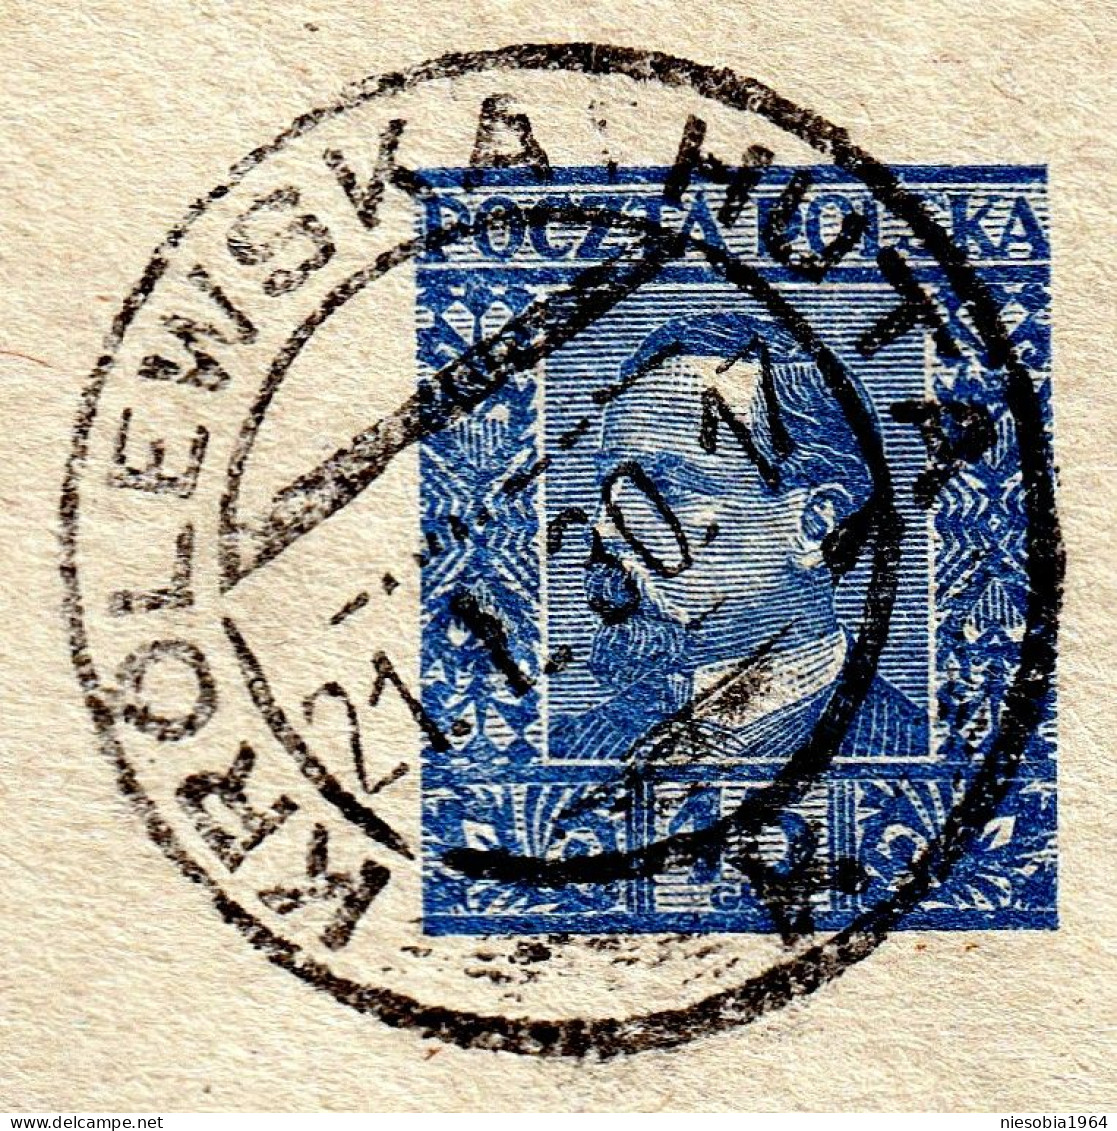 Republic Of Poland 15 Gr. Official Postcard Rzekiecki Private Defender   Królewska Huta 21/01/1930 - Cartas & Documentos